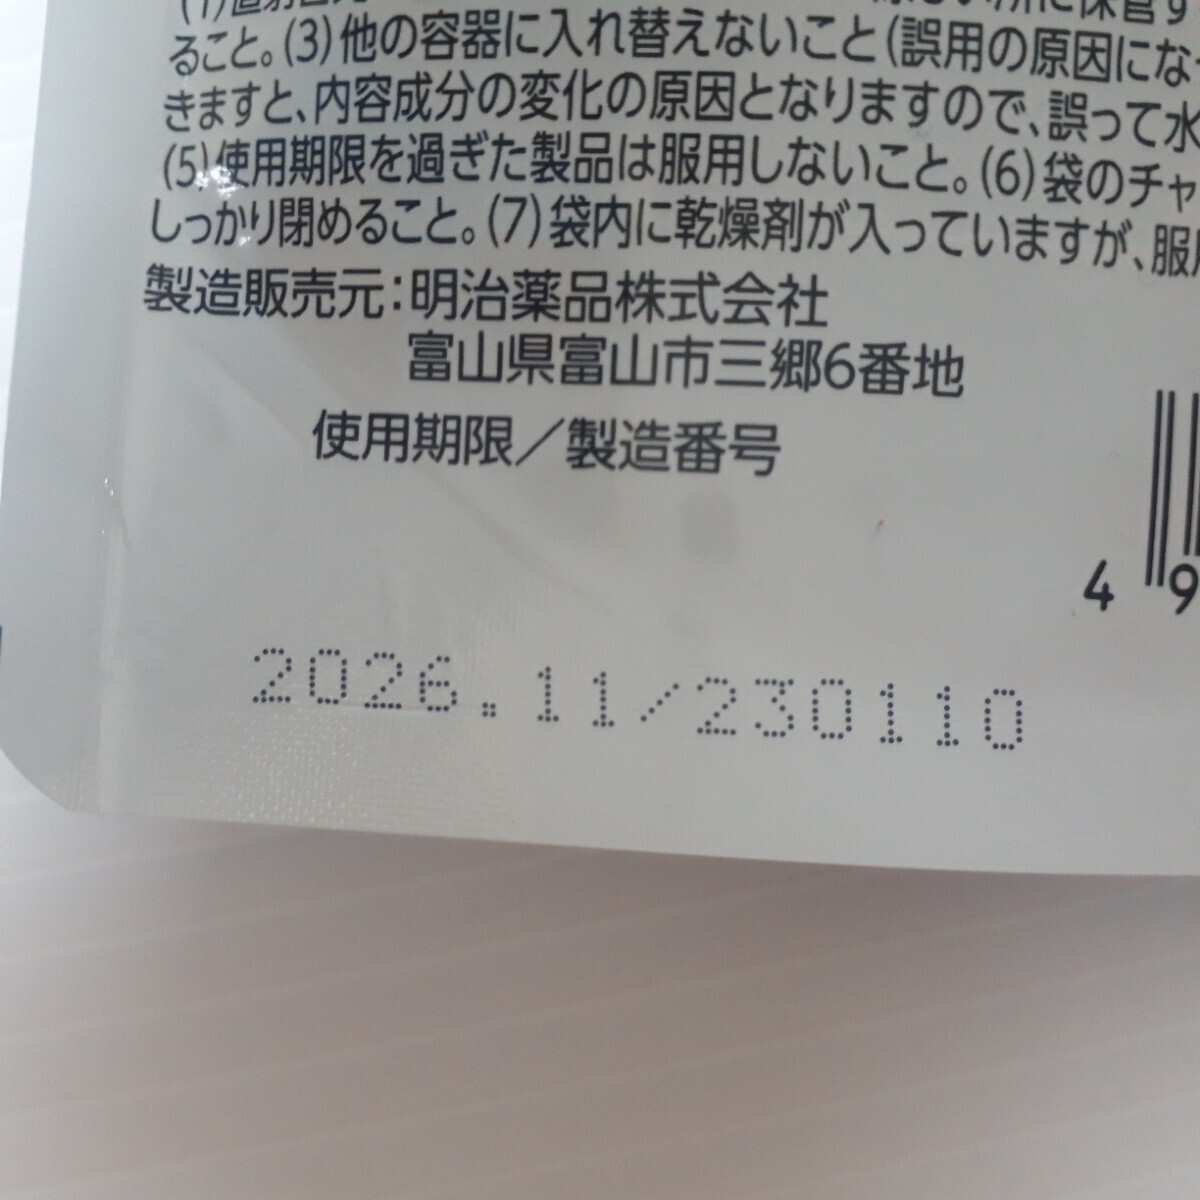 lakto long pills 180 pills ×1 sack Meiji medicines new goods unopened ②